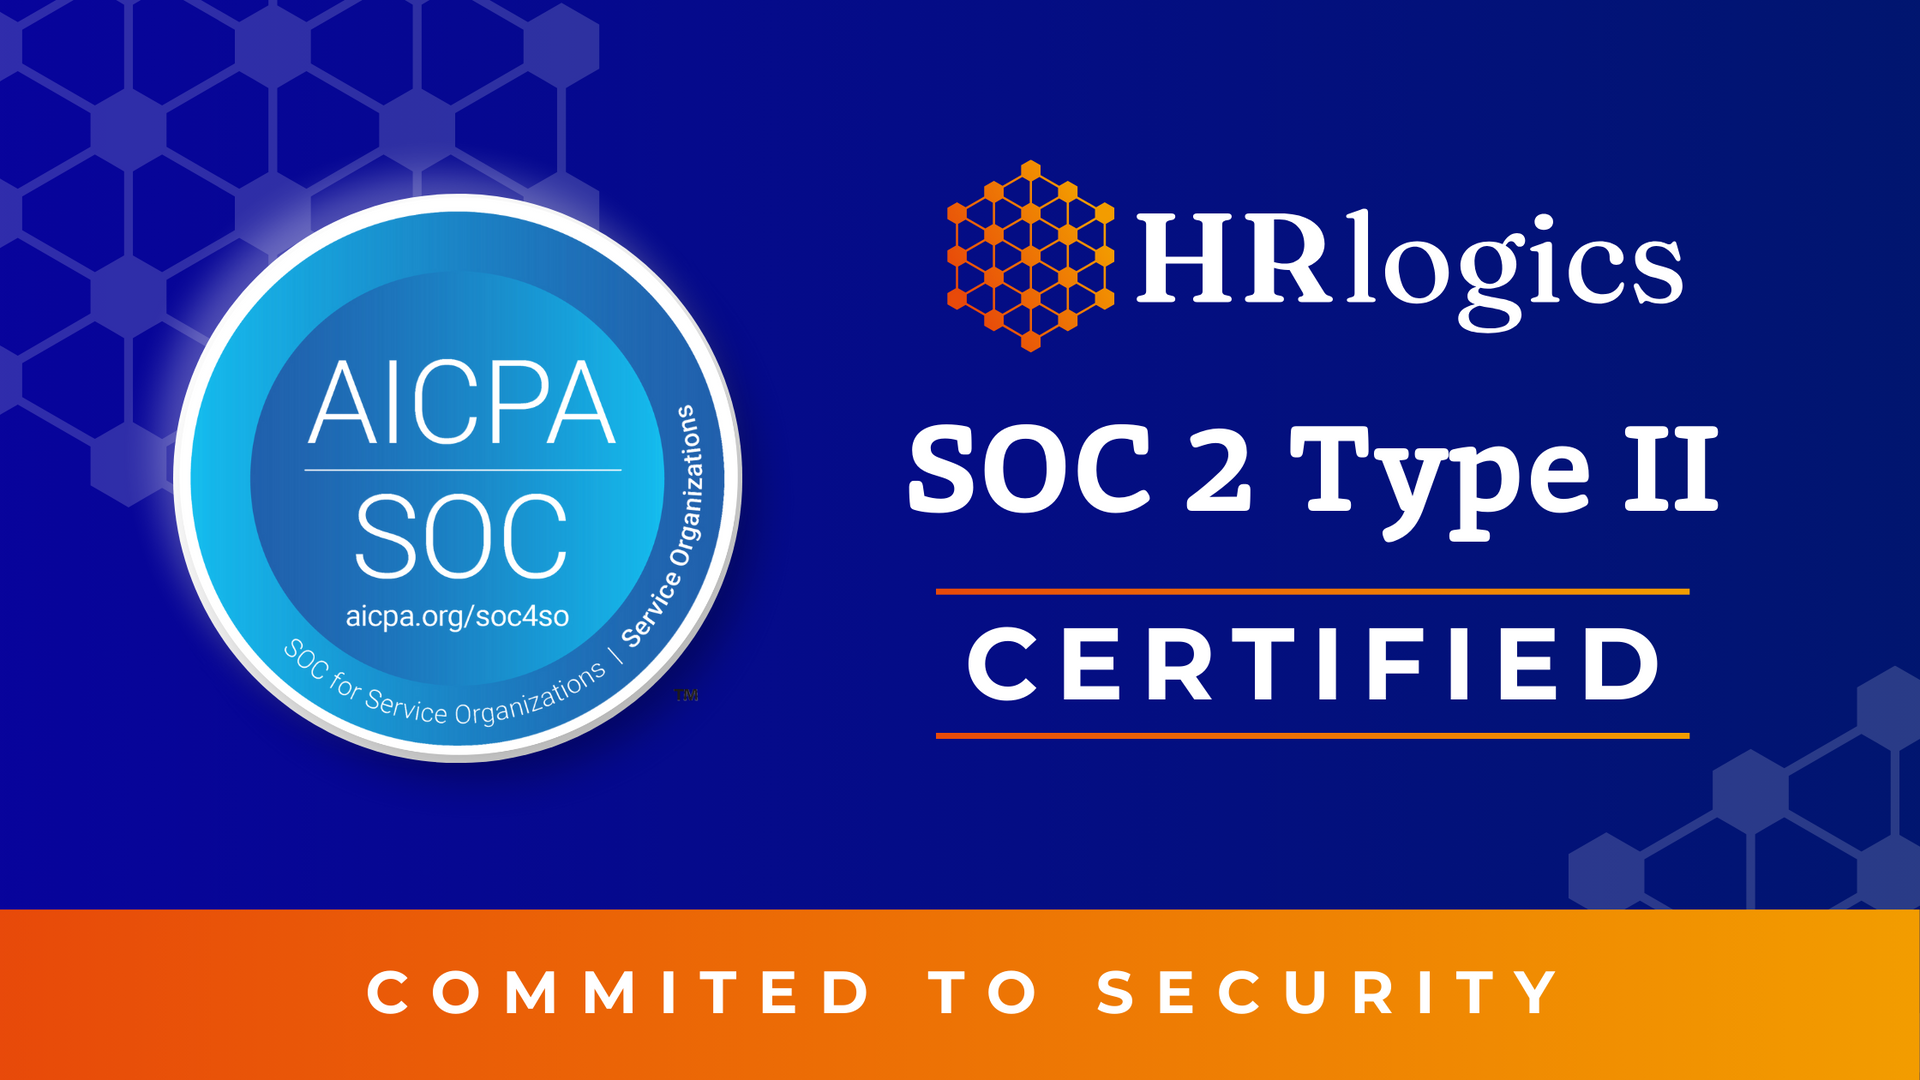 HRlogics Achieves SOC 2 Type II Certification